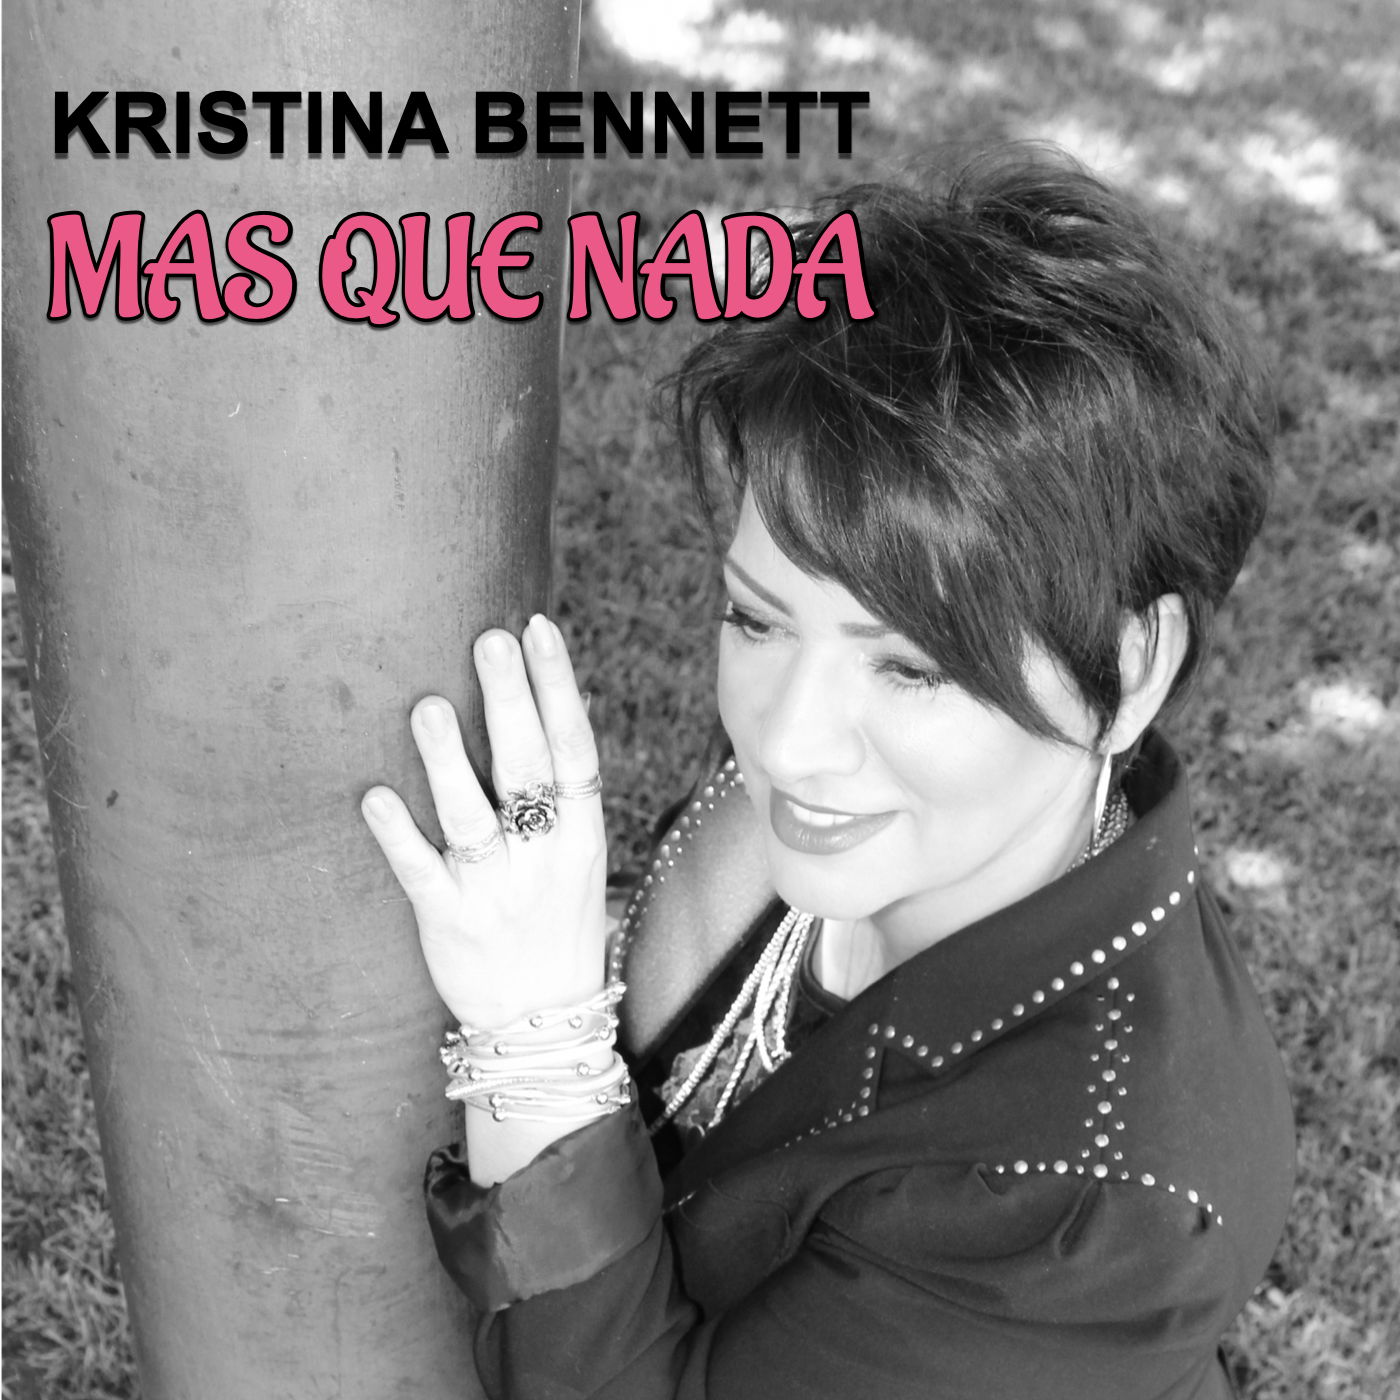 MAS QUE NADA by KRISTINA BENNETT